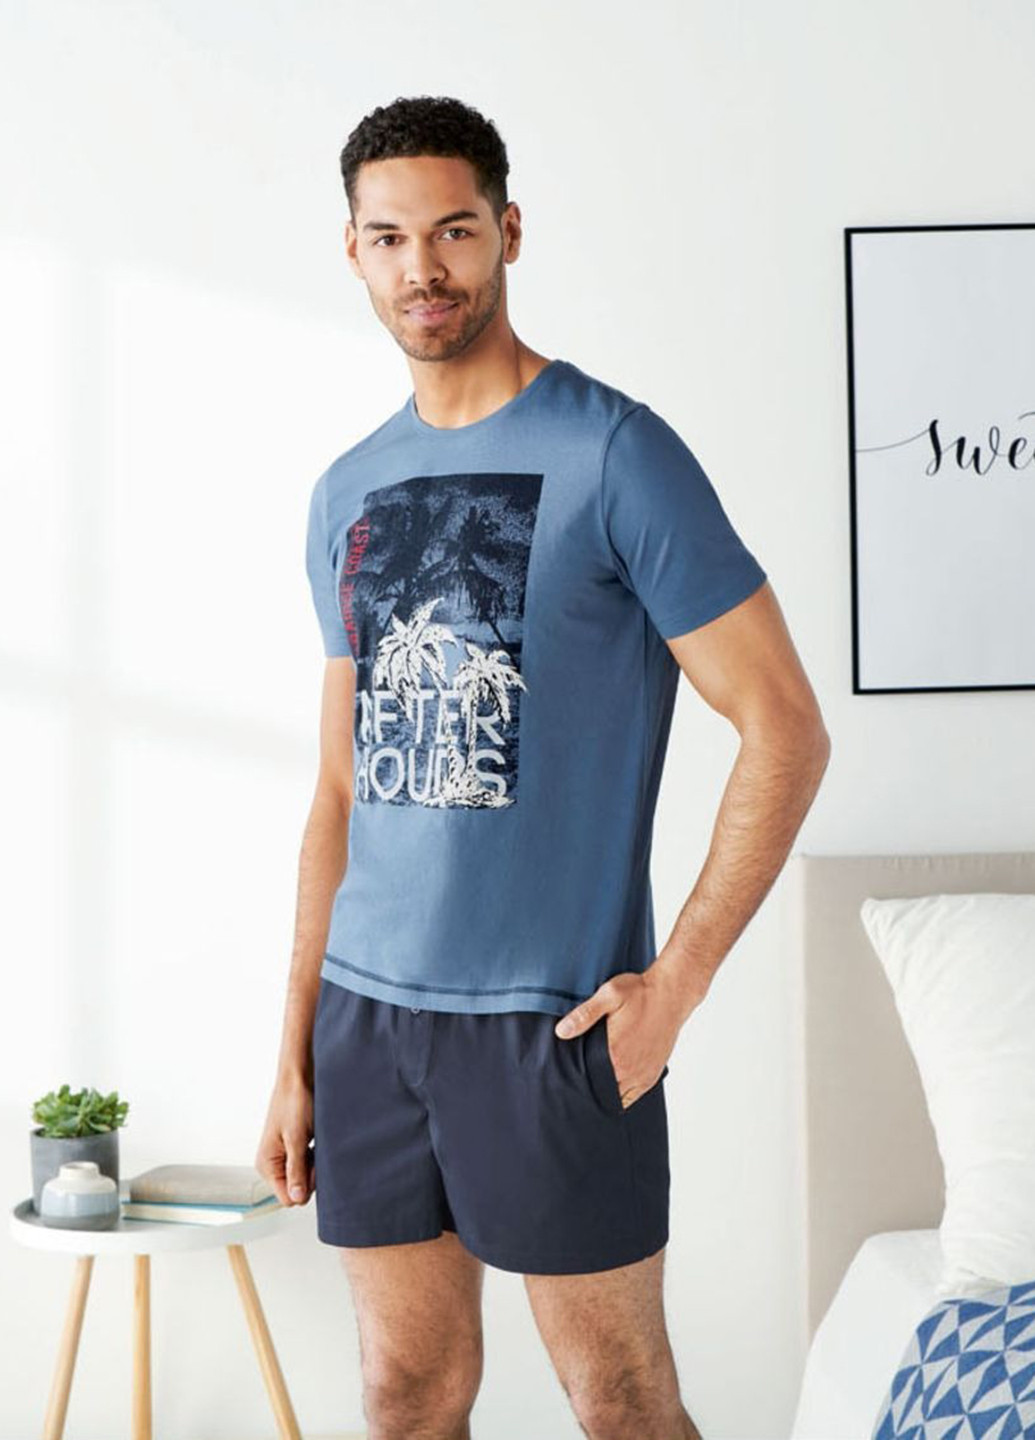 Пижама (футболка, шорты) Livergy футболка + шорты надпись комбинированная домашняя трикотаж, хлопок